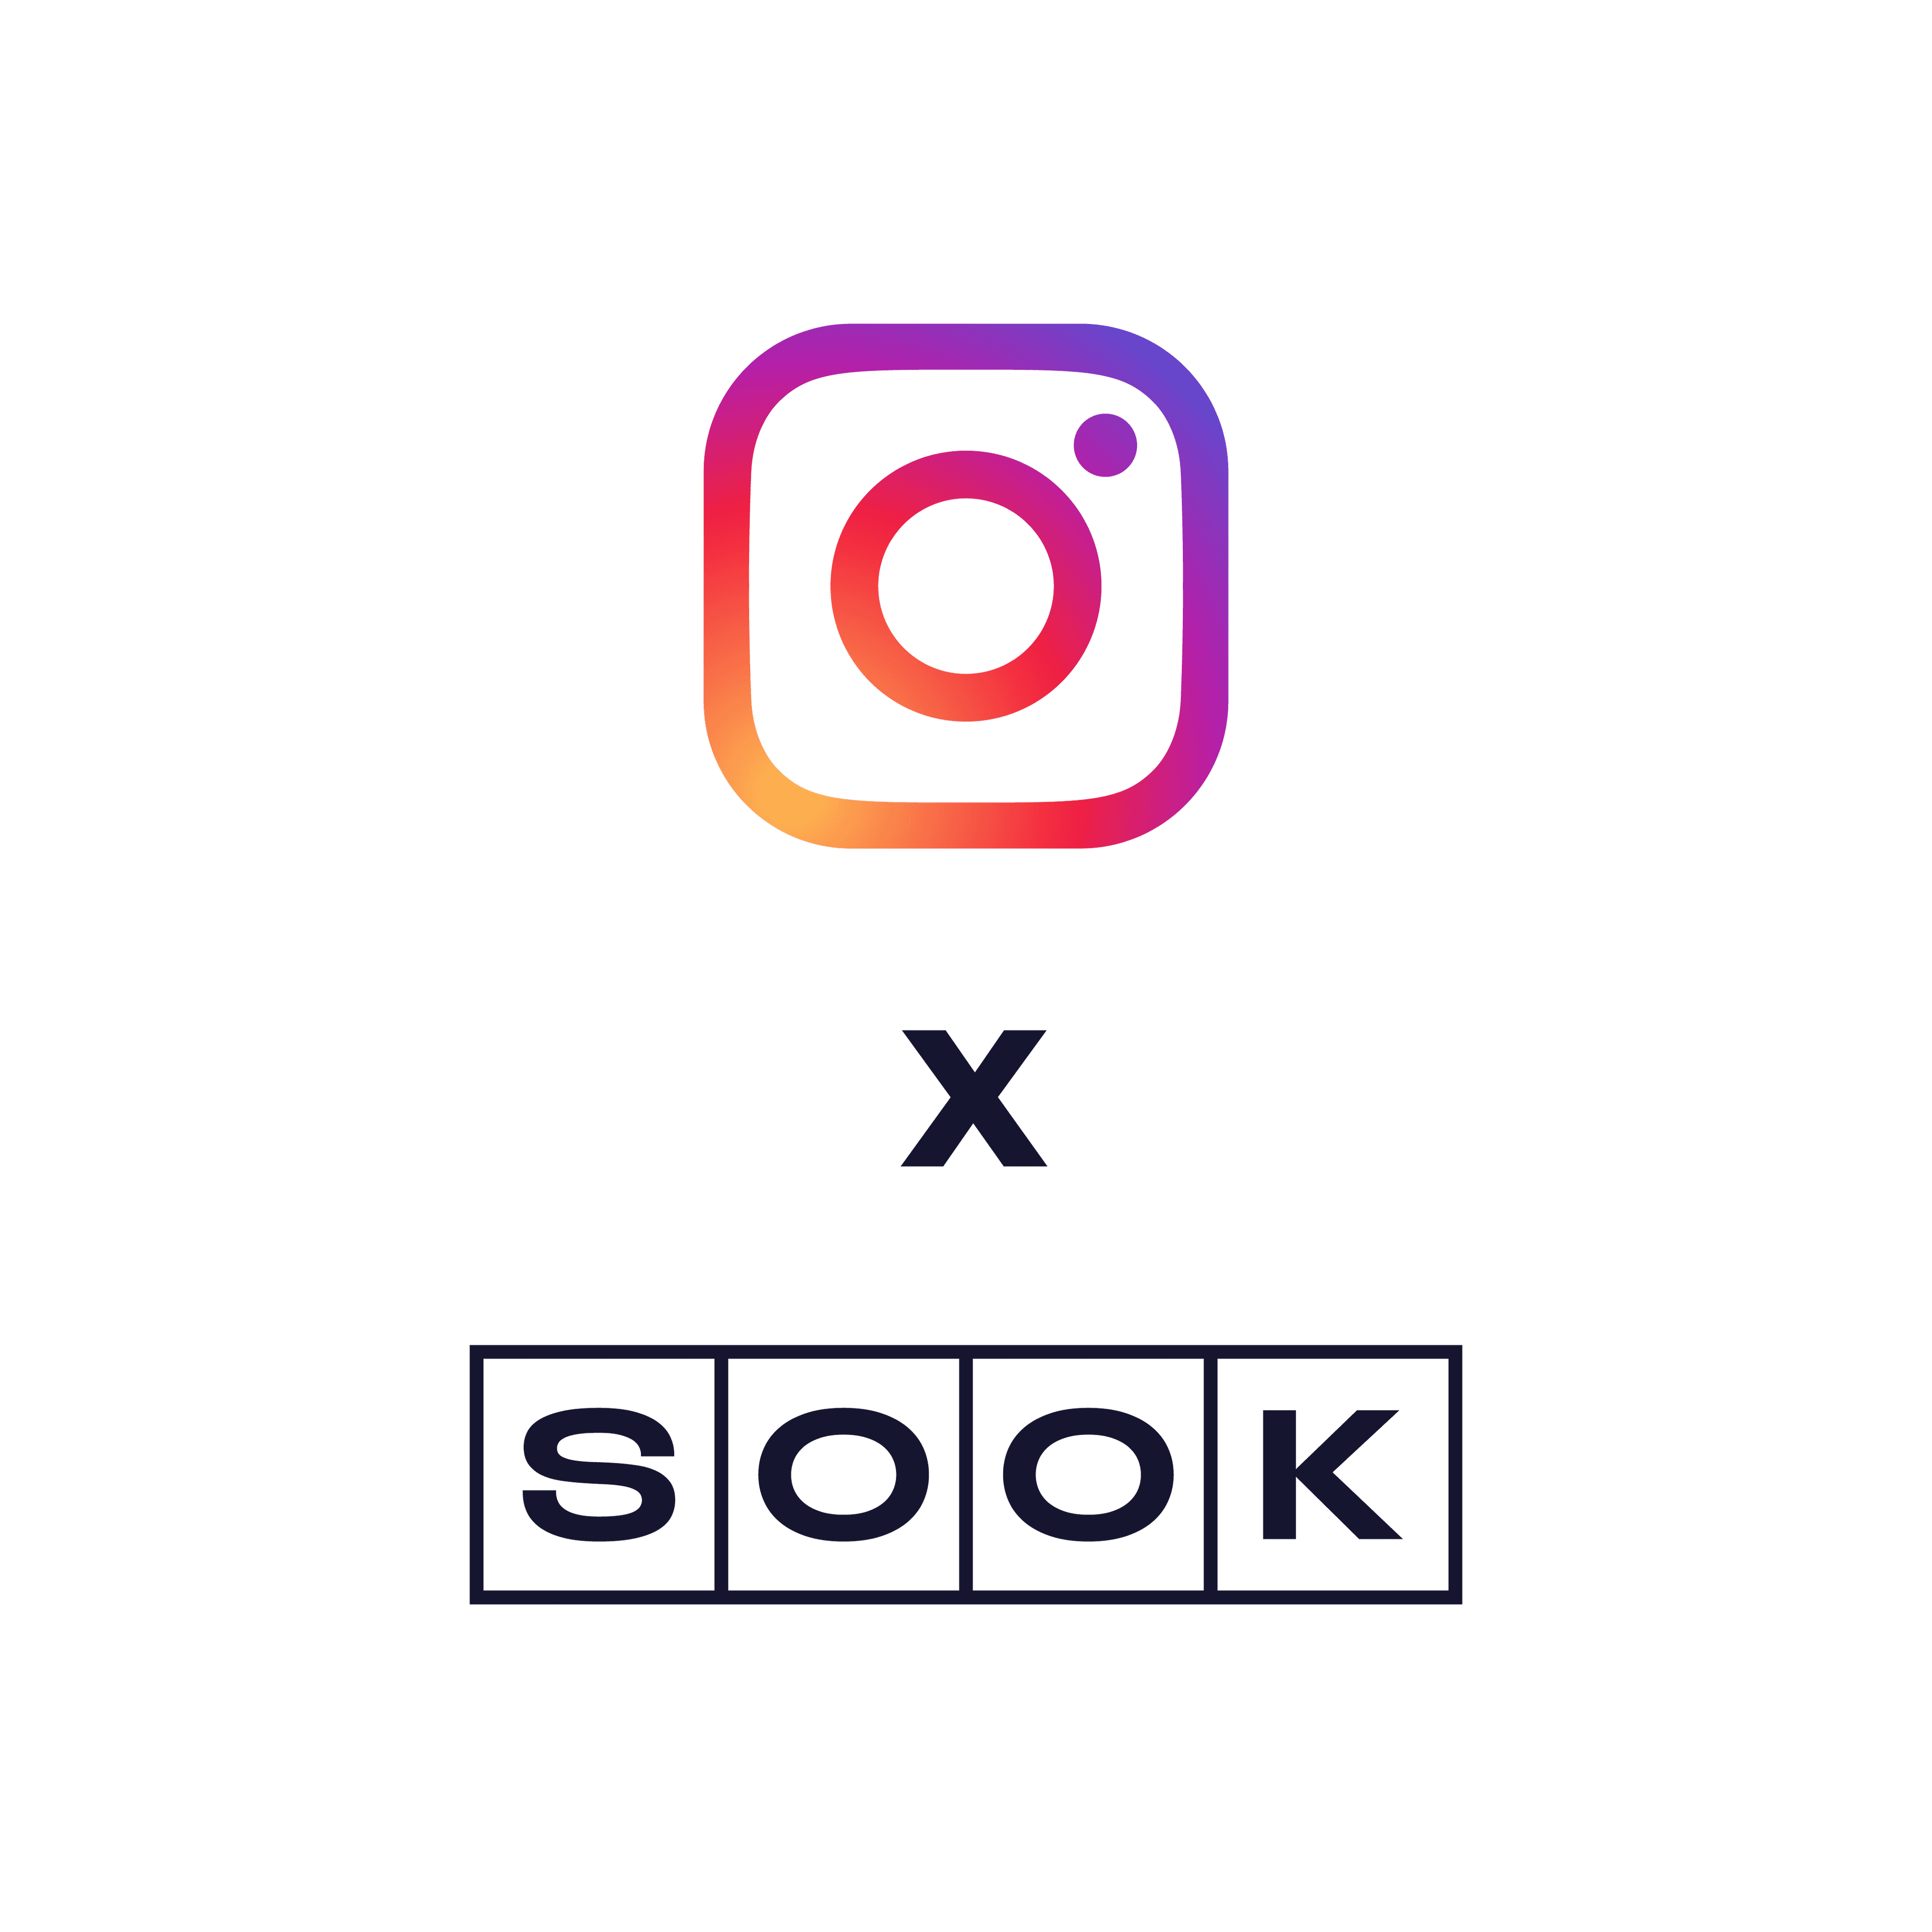 Instagram and Sook logo together on an image